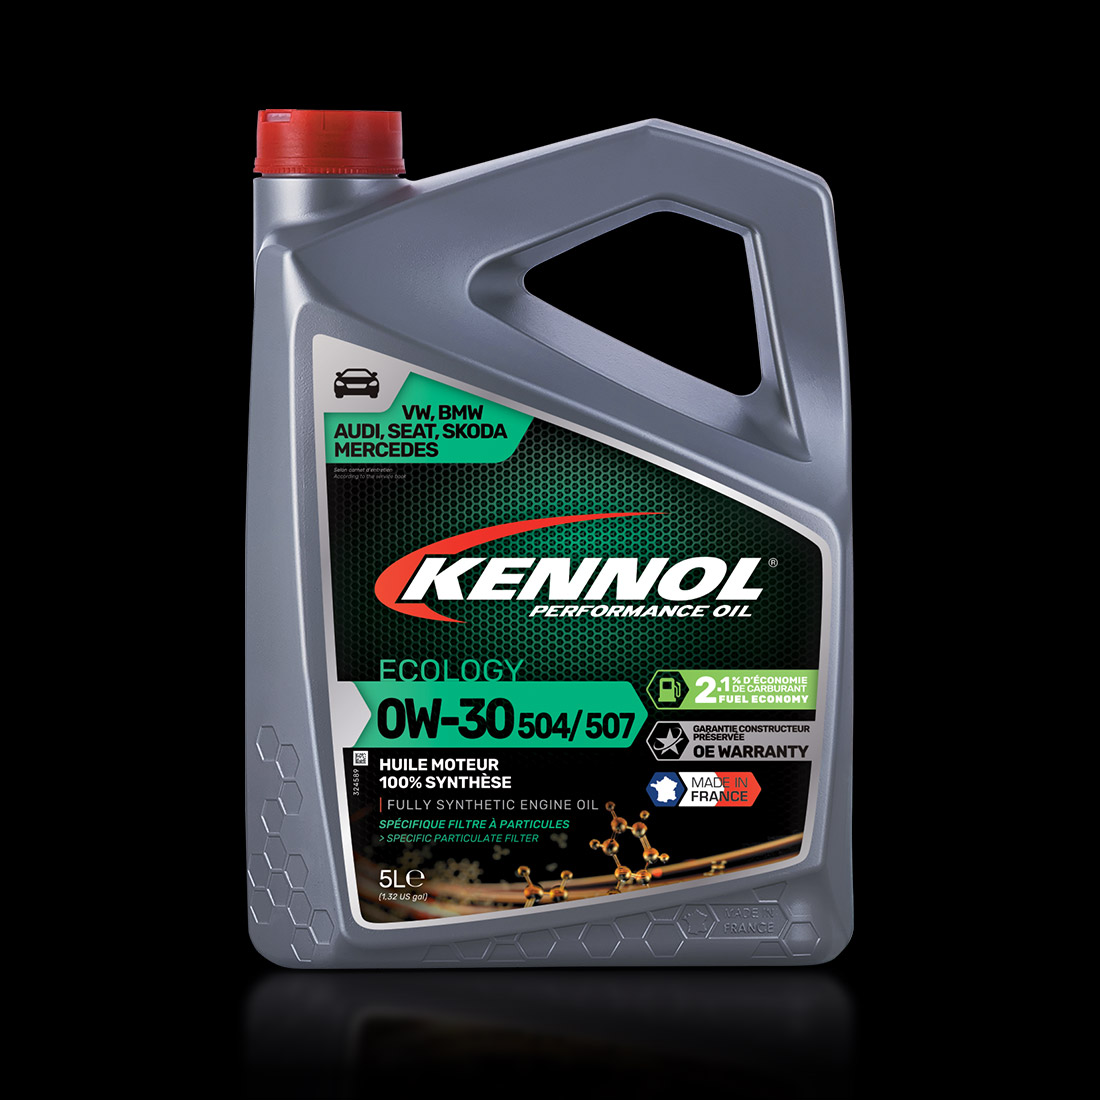 ECOLOGY 0W-30 504/507  KENNOL - Performance Oil